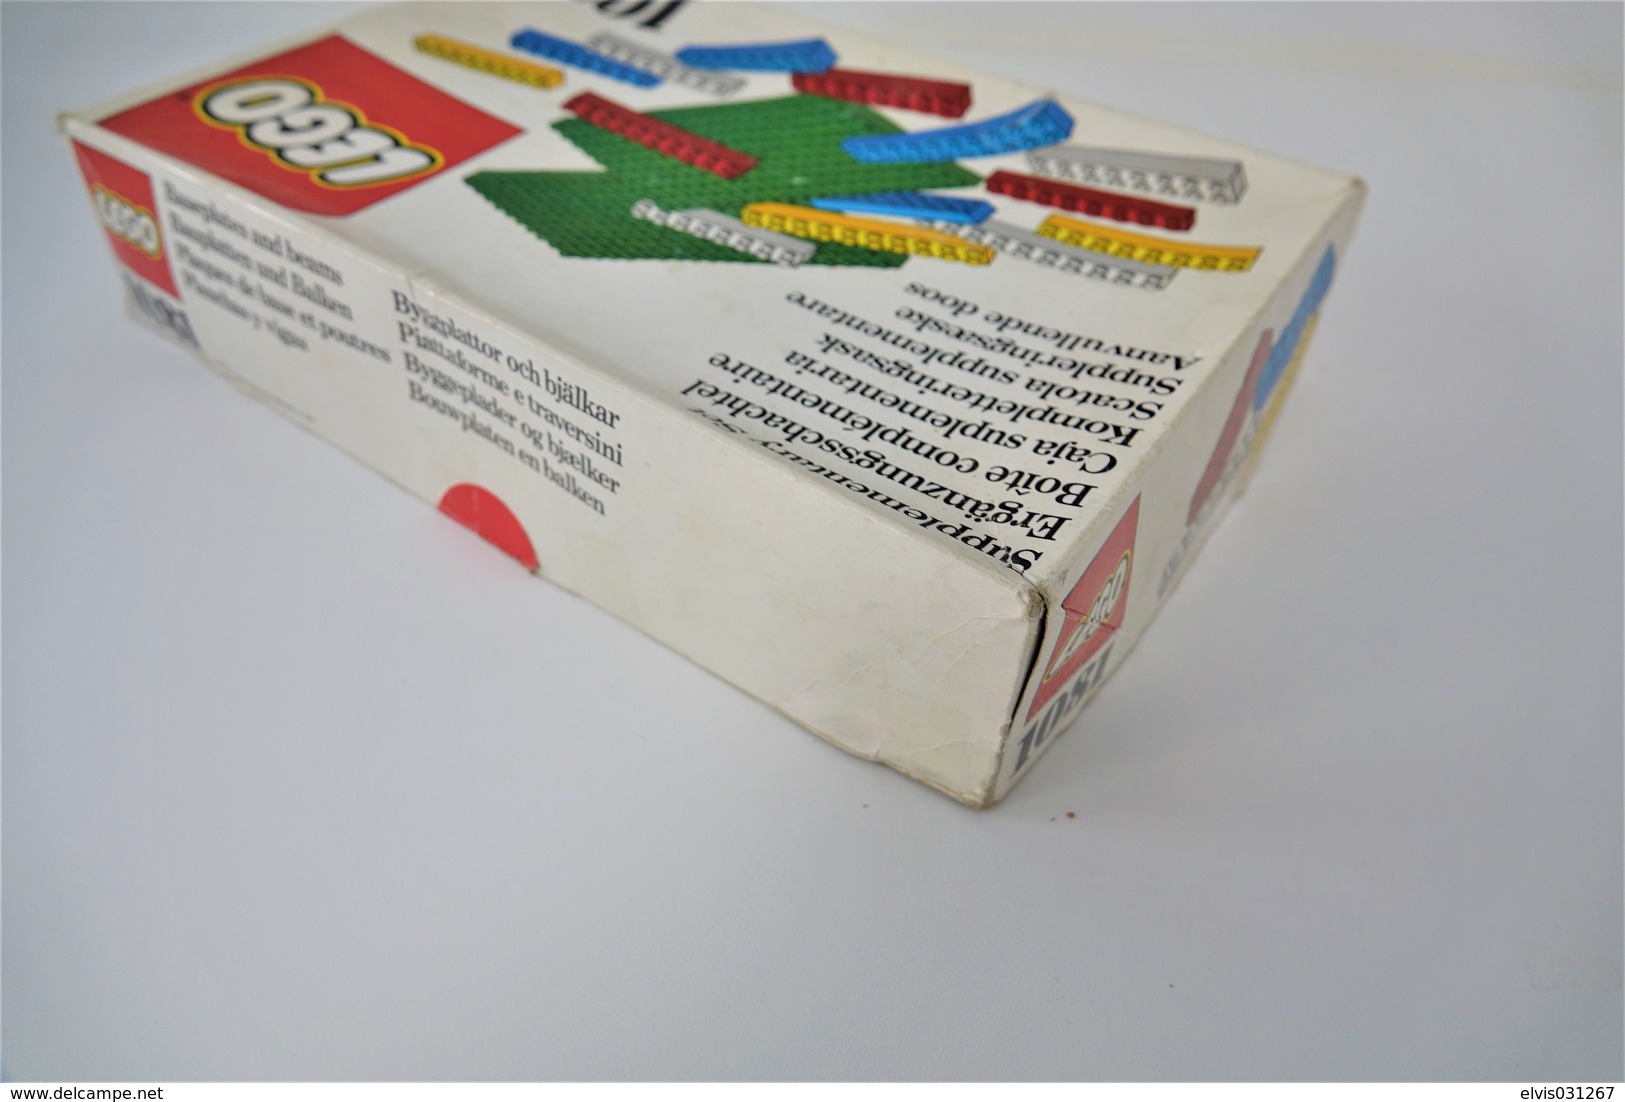 LEGO - 1081 Supplementary Box - Very Rare - Original Box - Original Lego 1976 - Vintage - Kataloge